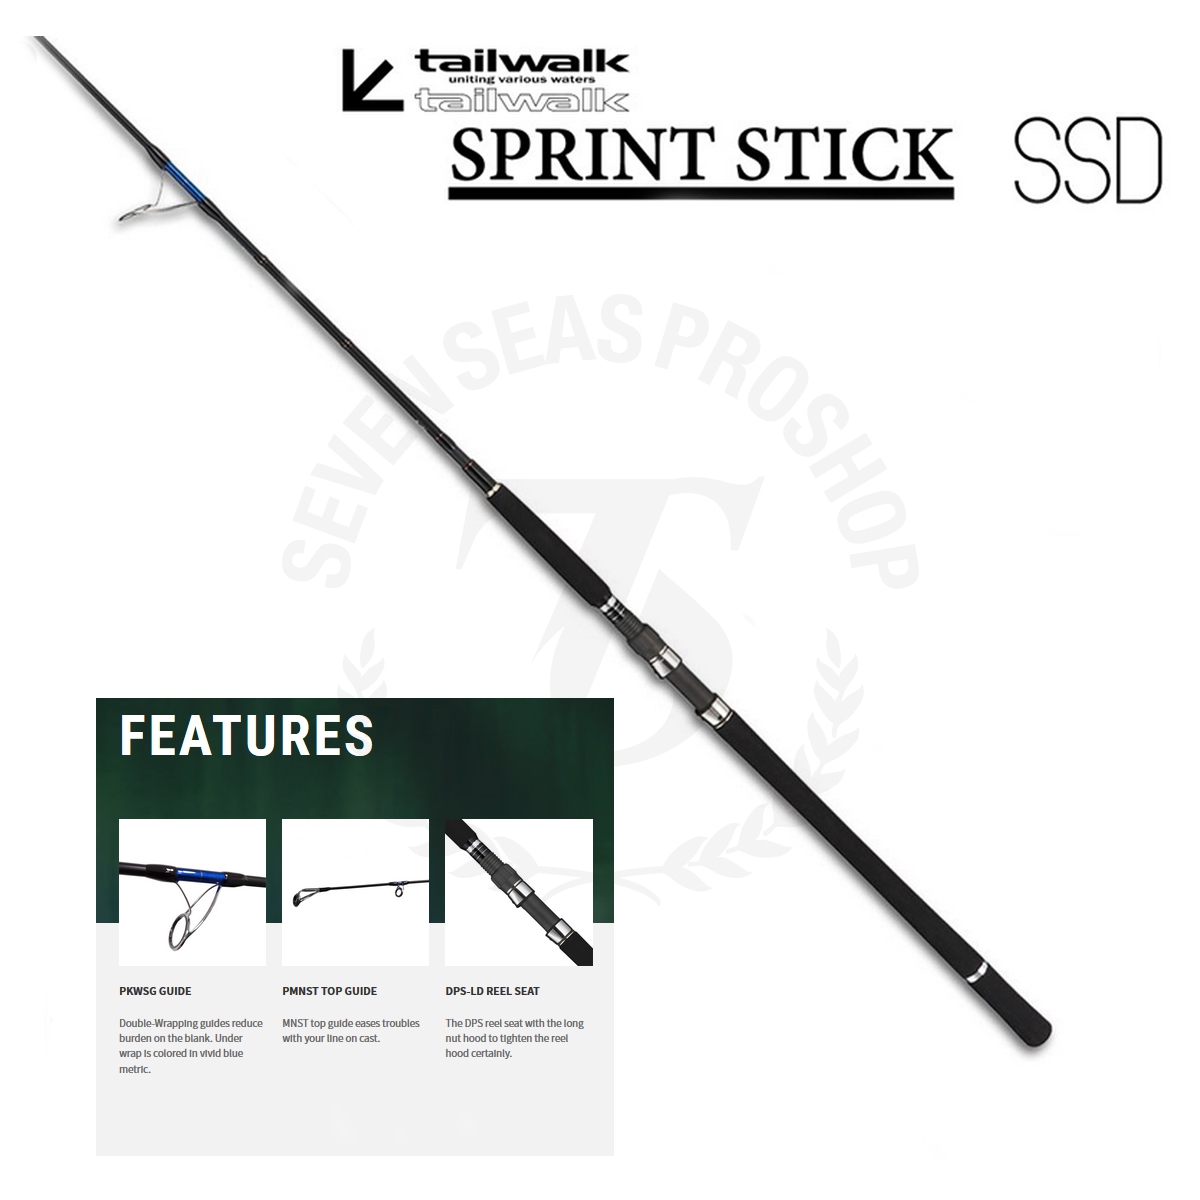 TAILWALK Sprint Stick SSD 80XXH Rods buy at